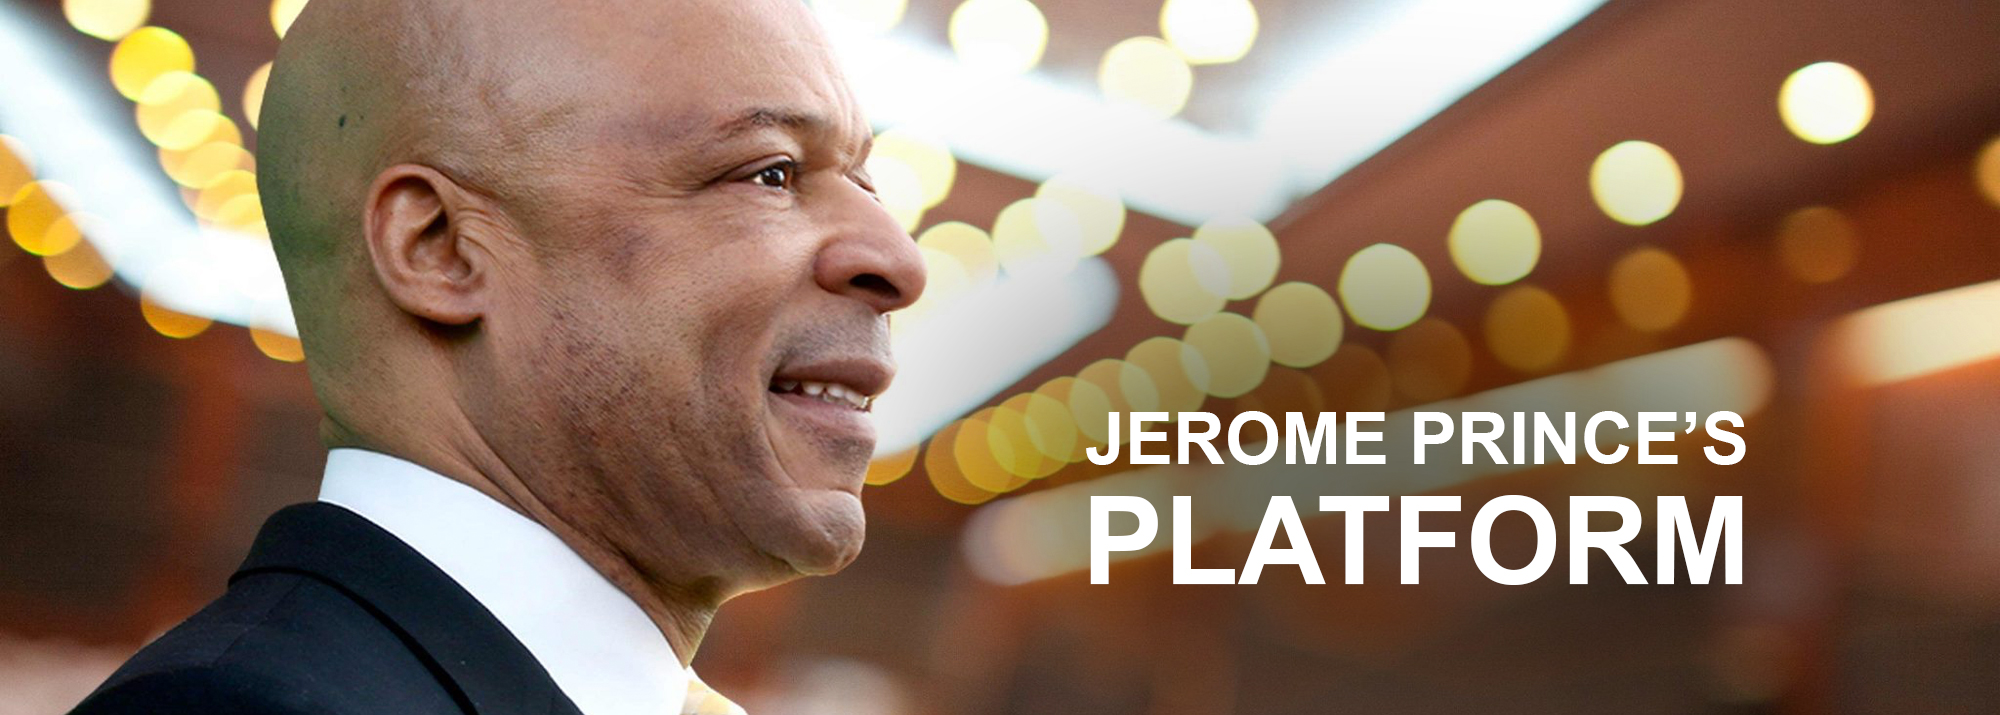 Jerome Prince For Mayor